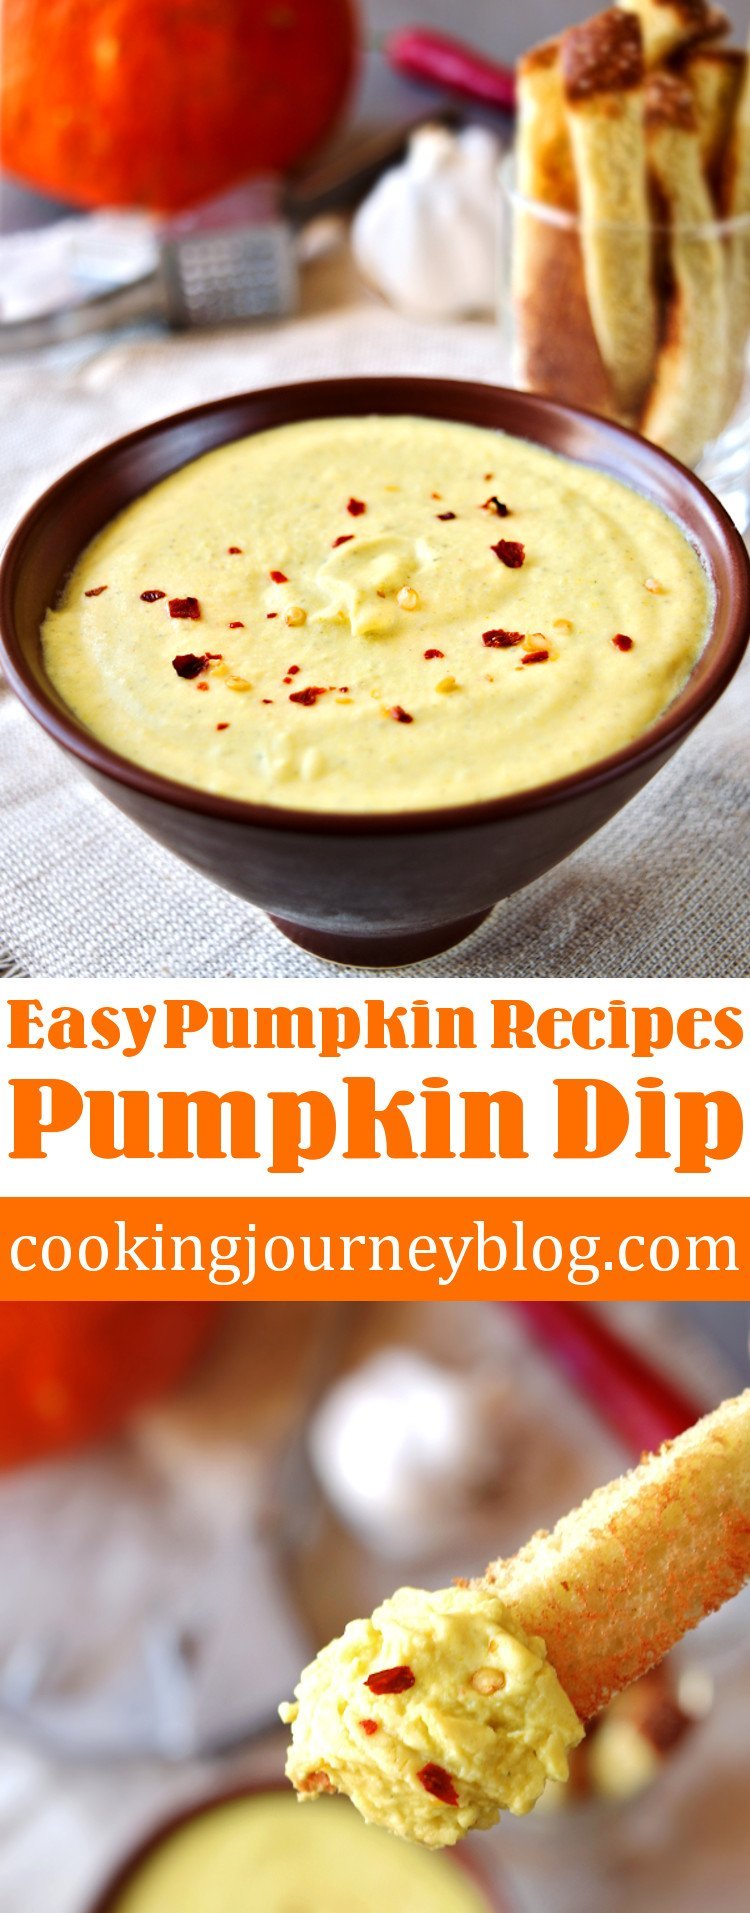 Pumpkin dip recipe – Easy pumpkin recipes pin